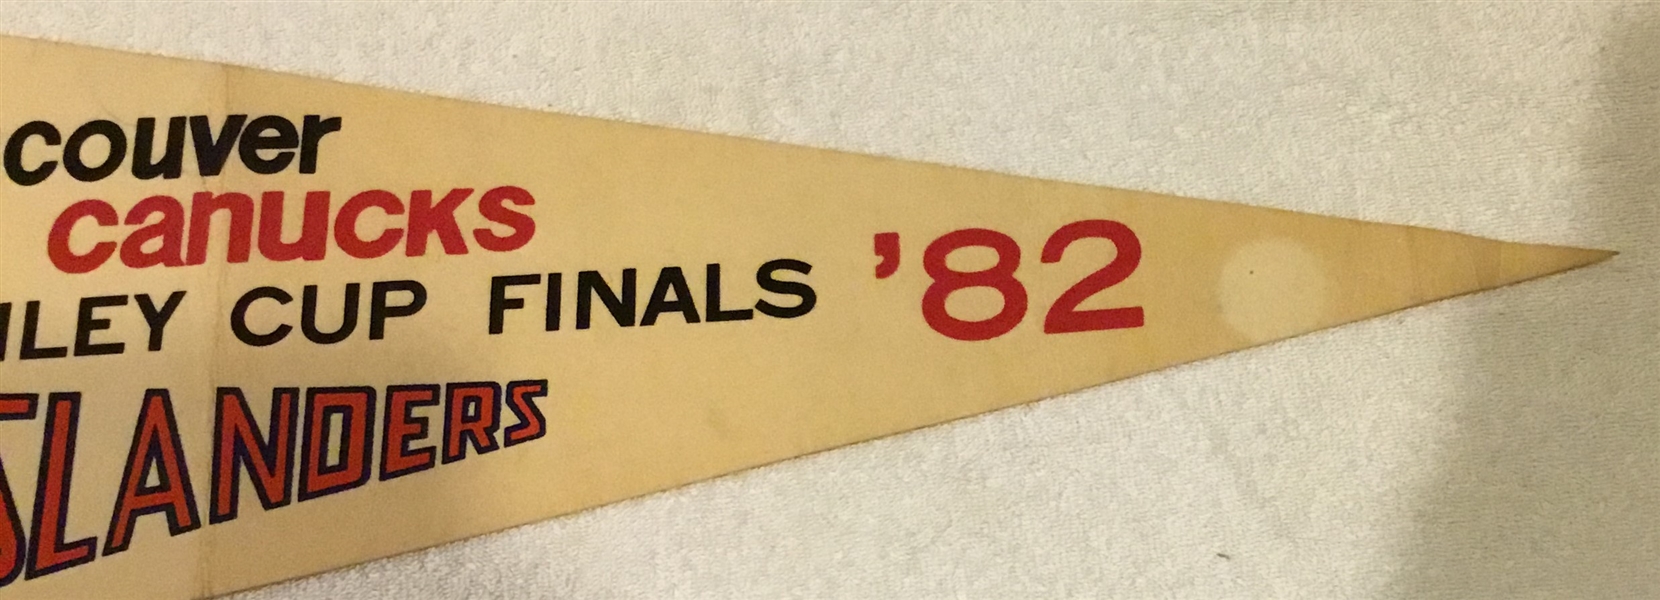 1982 STANLEY CUP FINALS PENNANT - ISLANDERS / CANUCKS